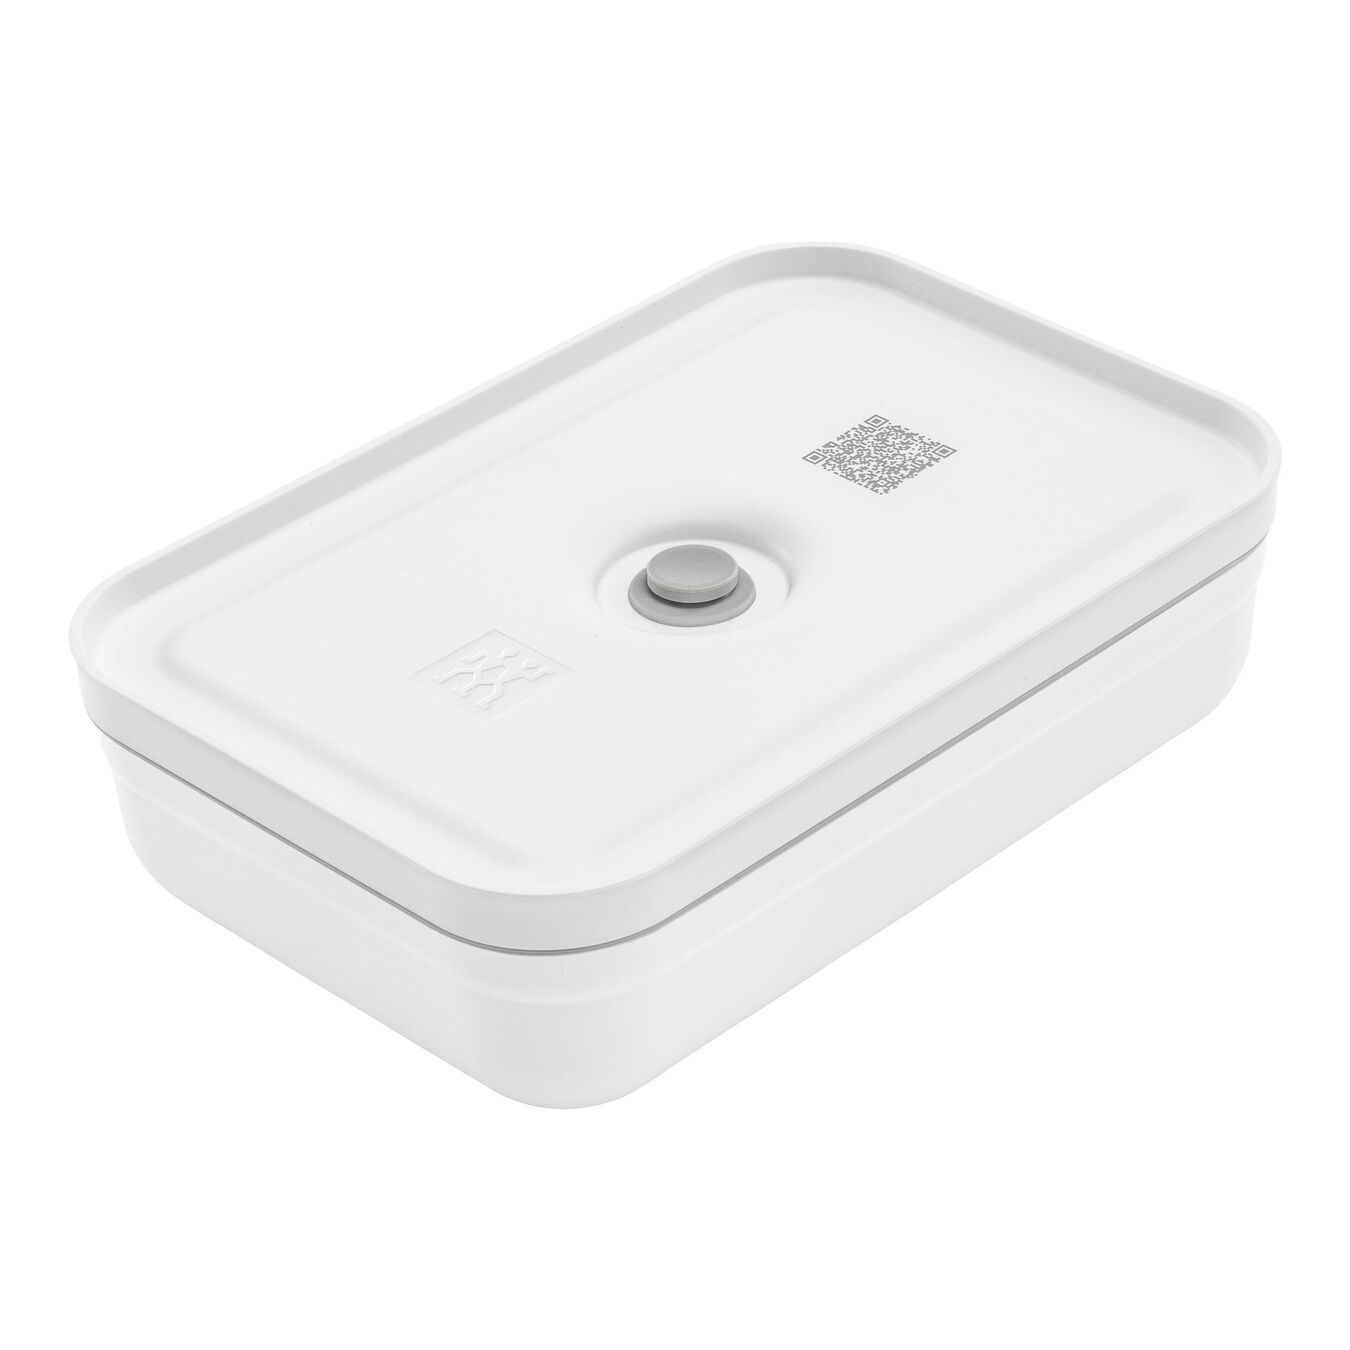 L Flat Vacuum lunch box, plastic, white-grey,,large 1